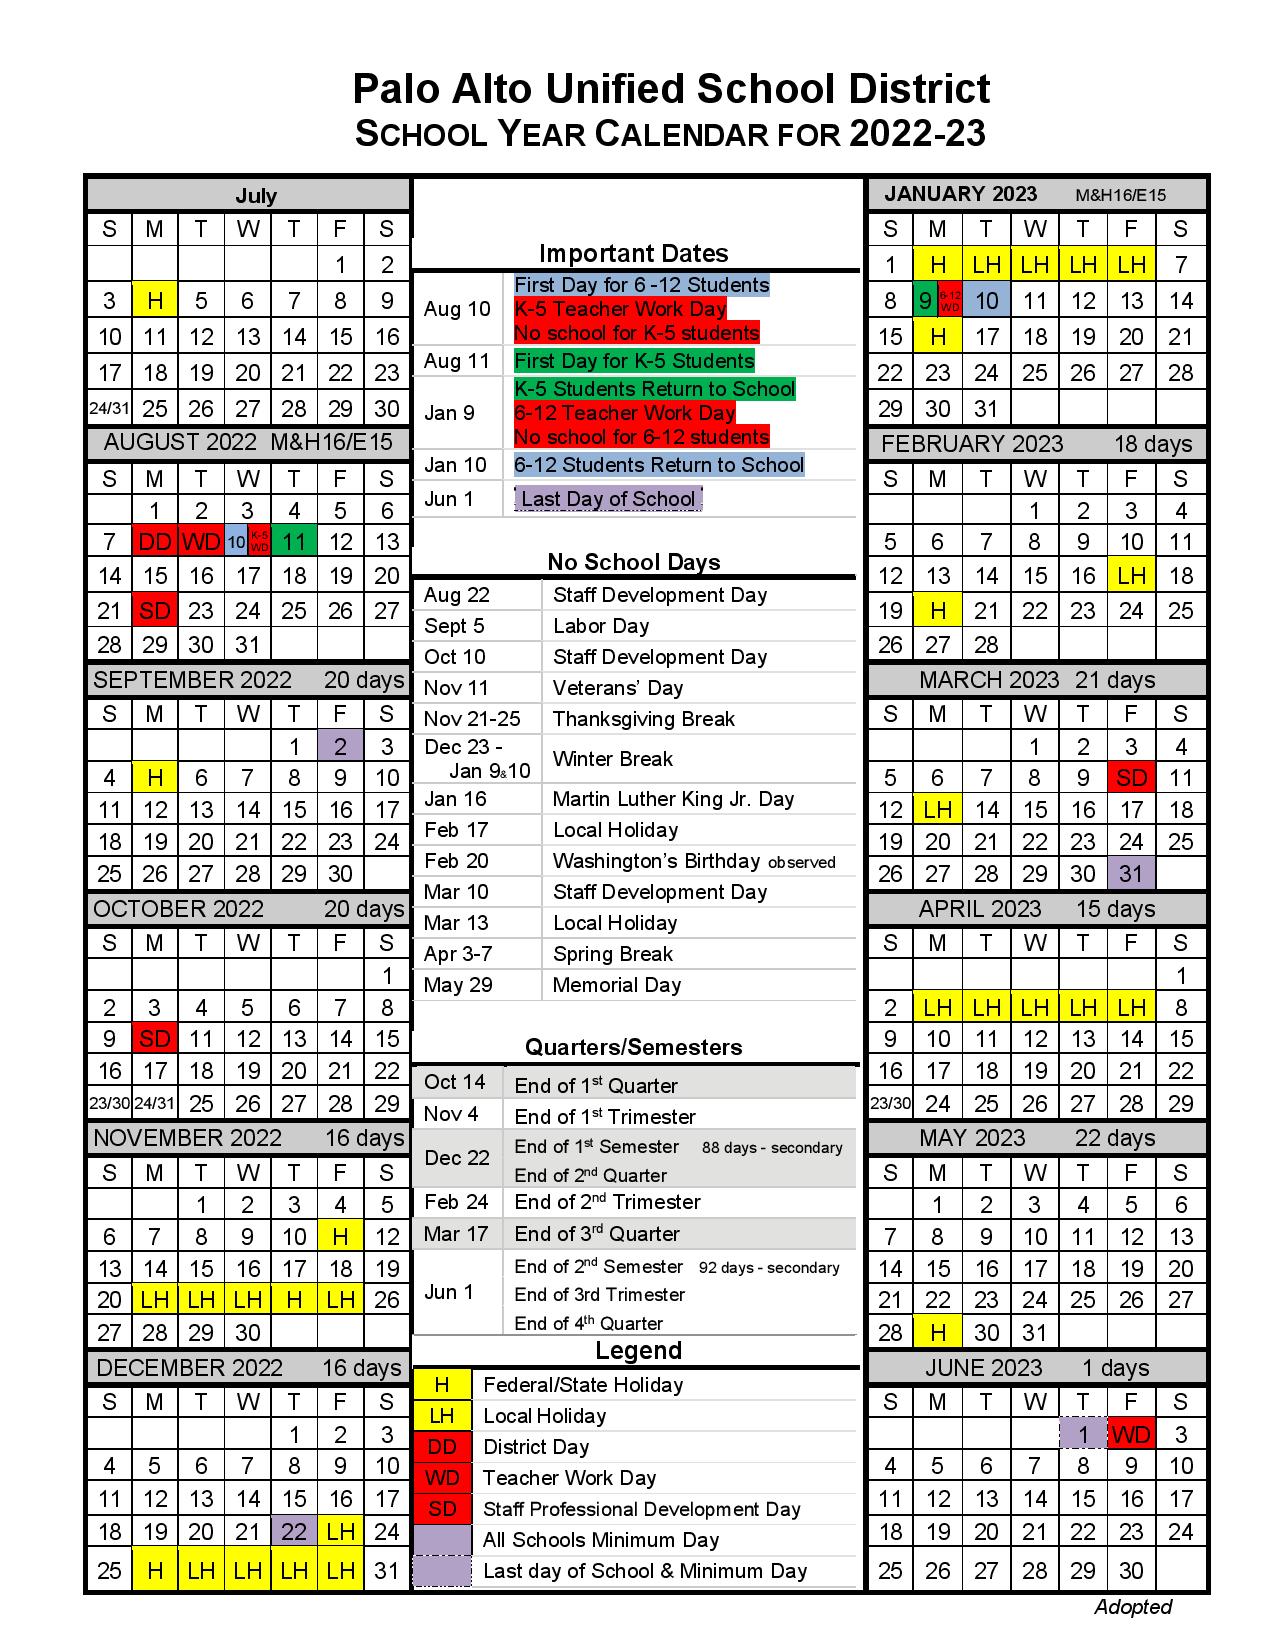 Oldham County School Calendar 2024 August 2024 Calendar